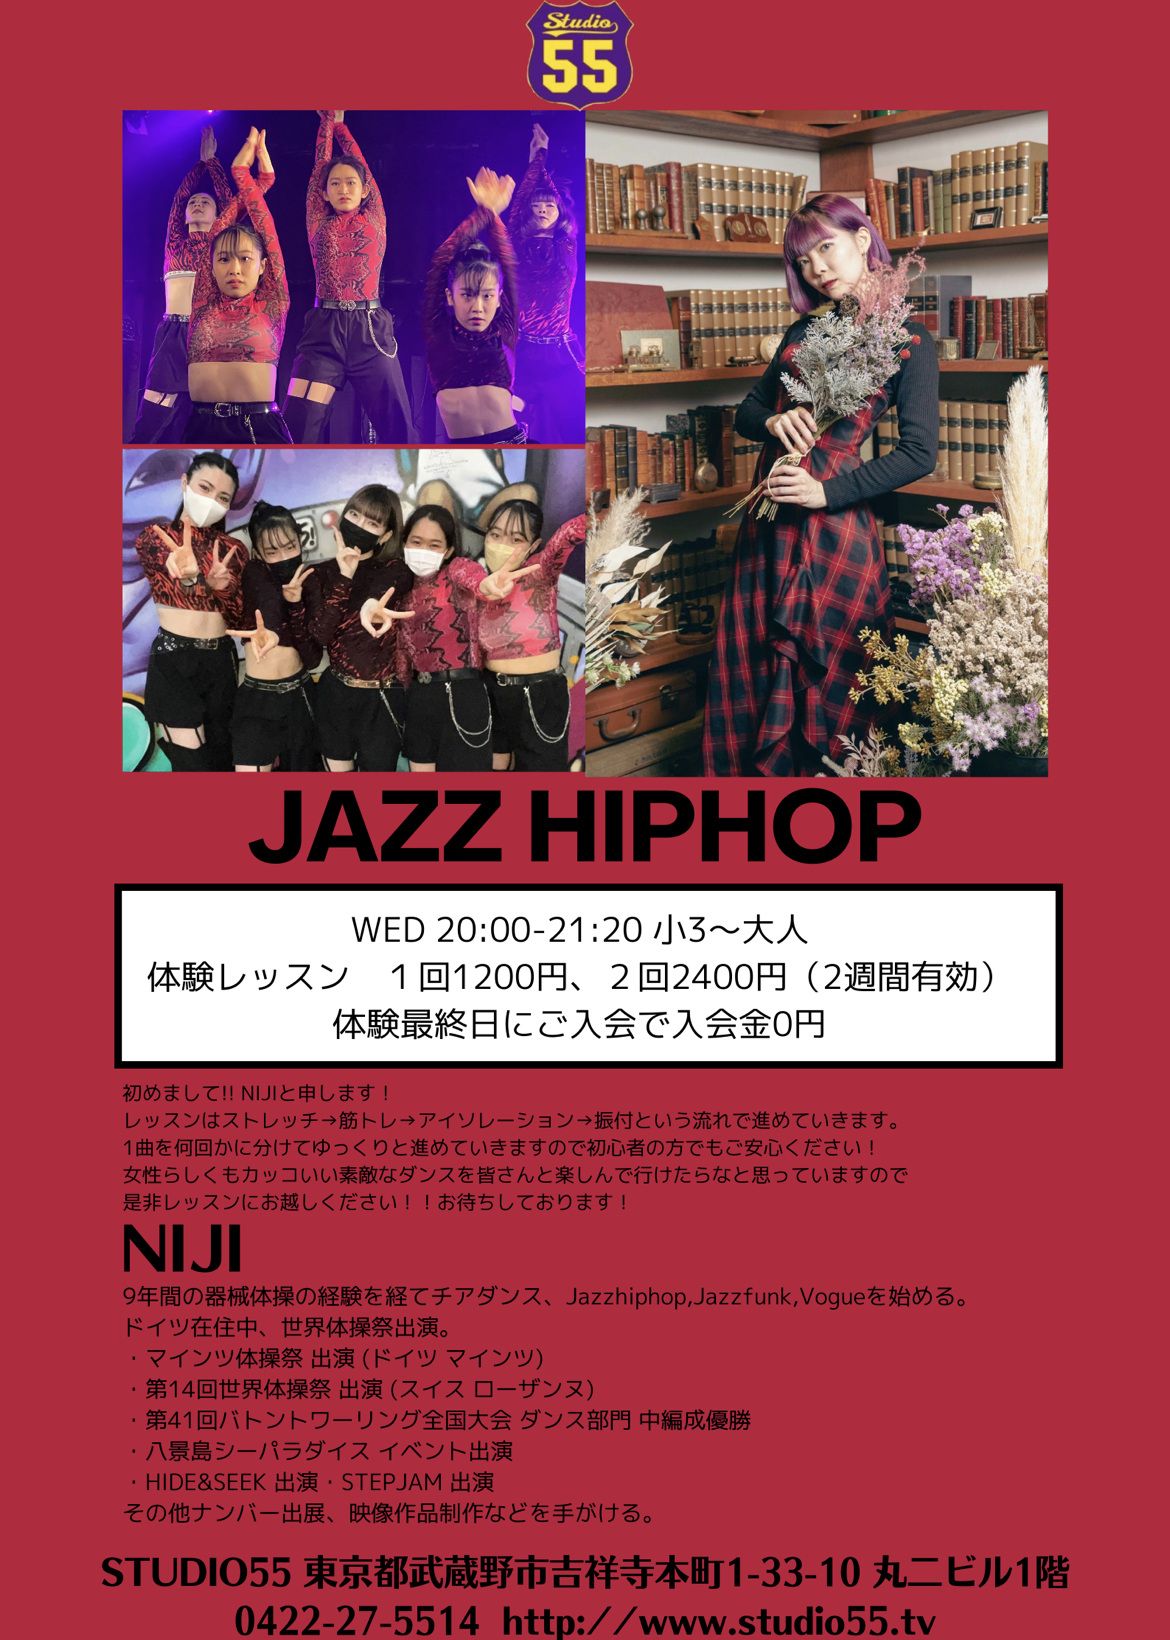 Jazz/HipHop - dance & show company